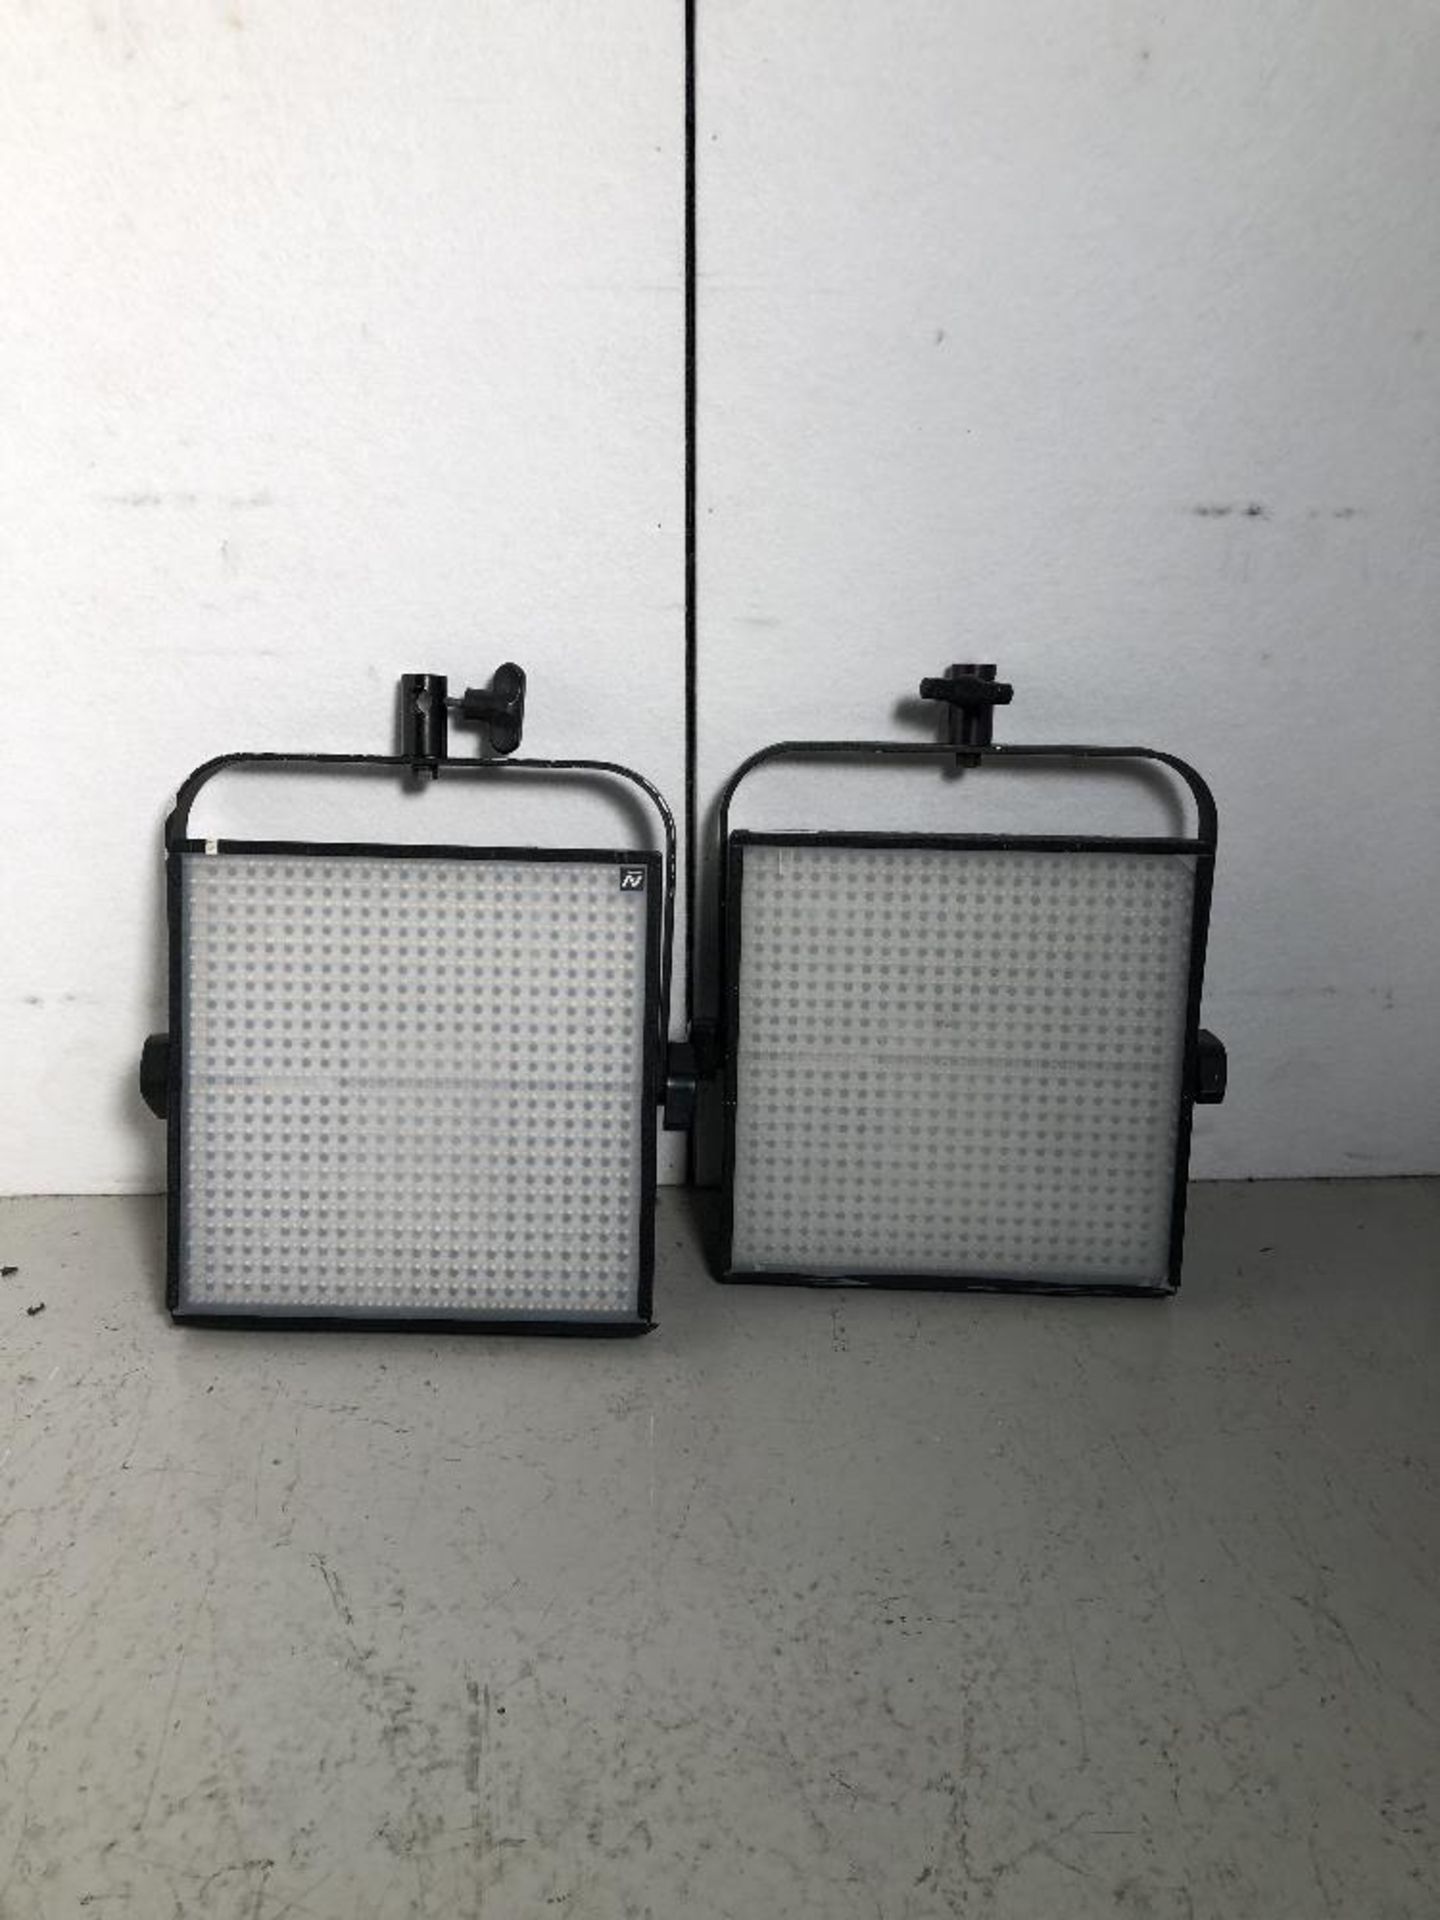 Litepanels 1X1 LED Panel Light kit - Image 3 of 7